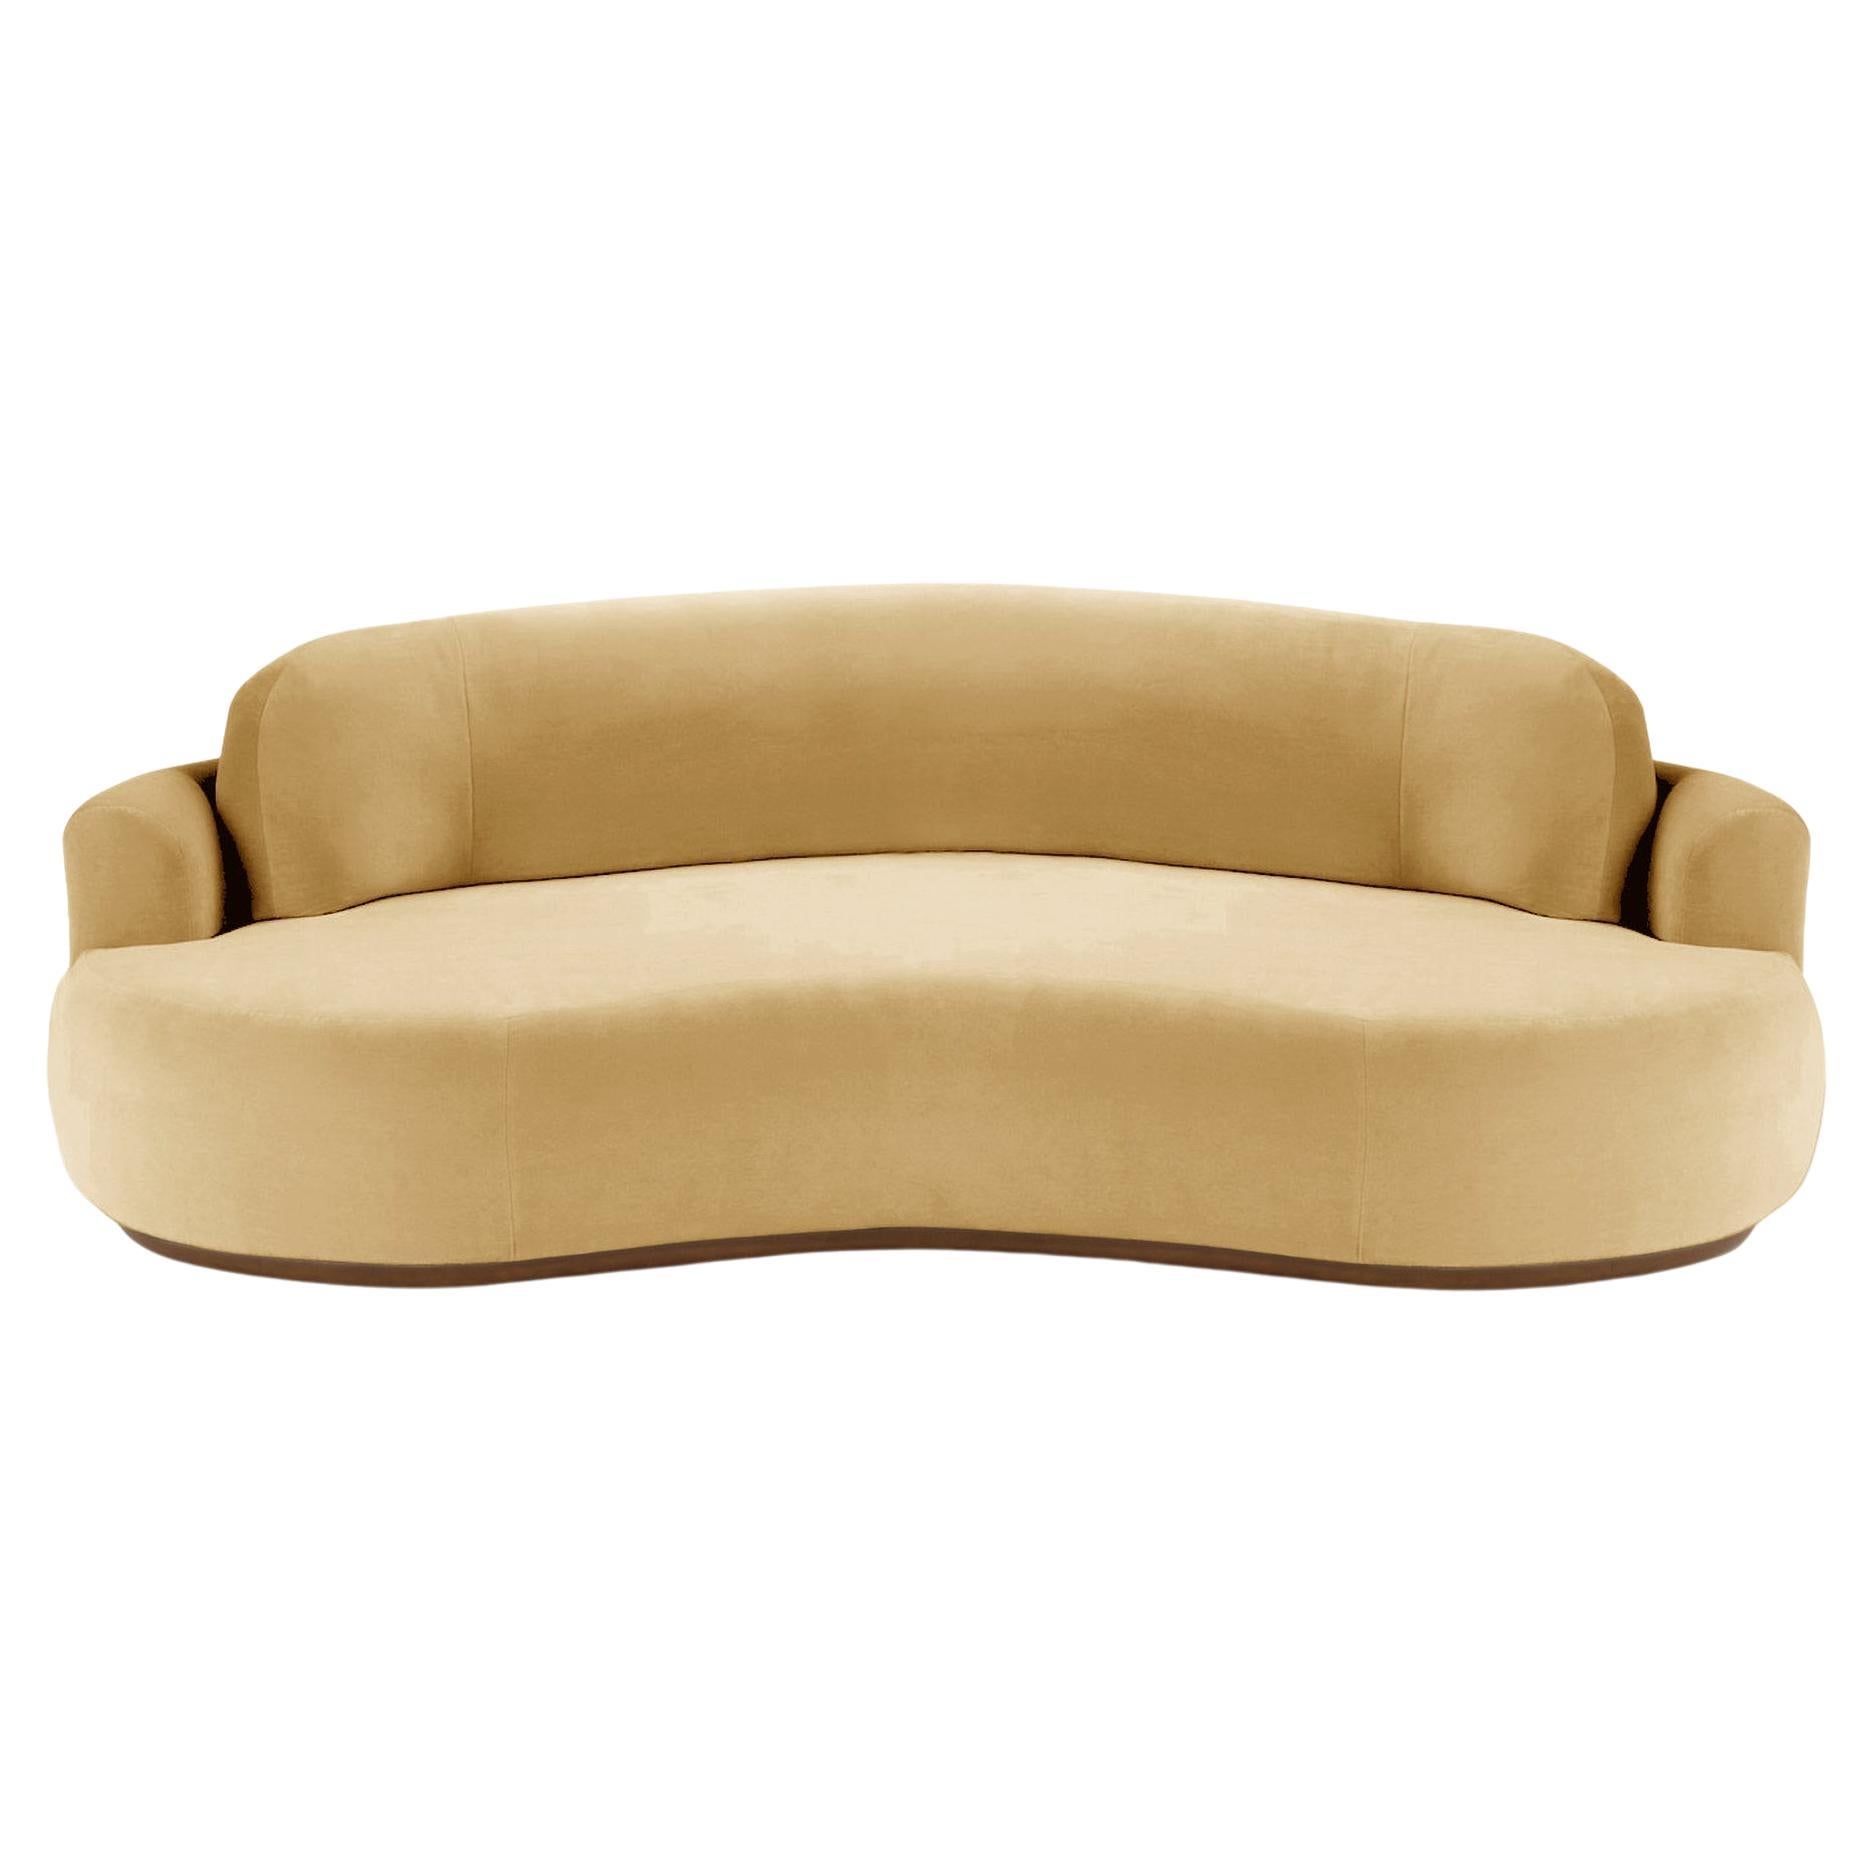 Naked Curved Sofa, Medium with Beech Ash-056-1 and Vigo Plantain